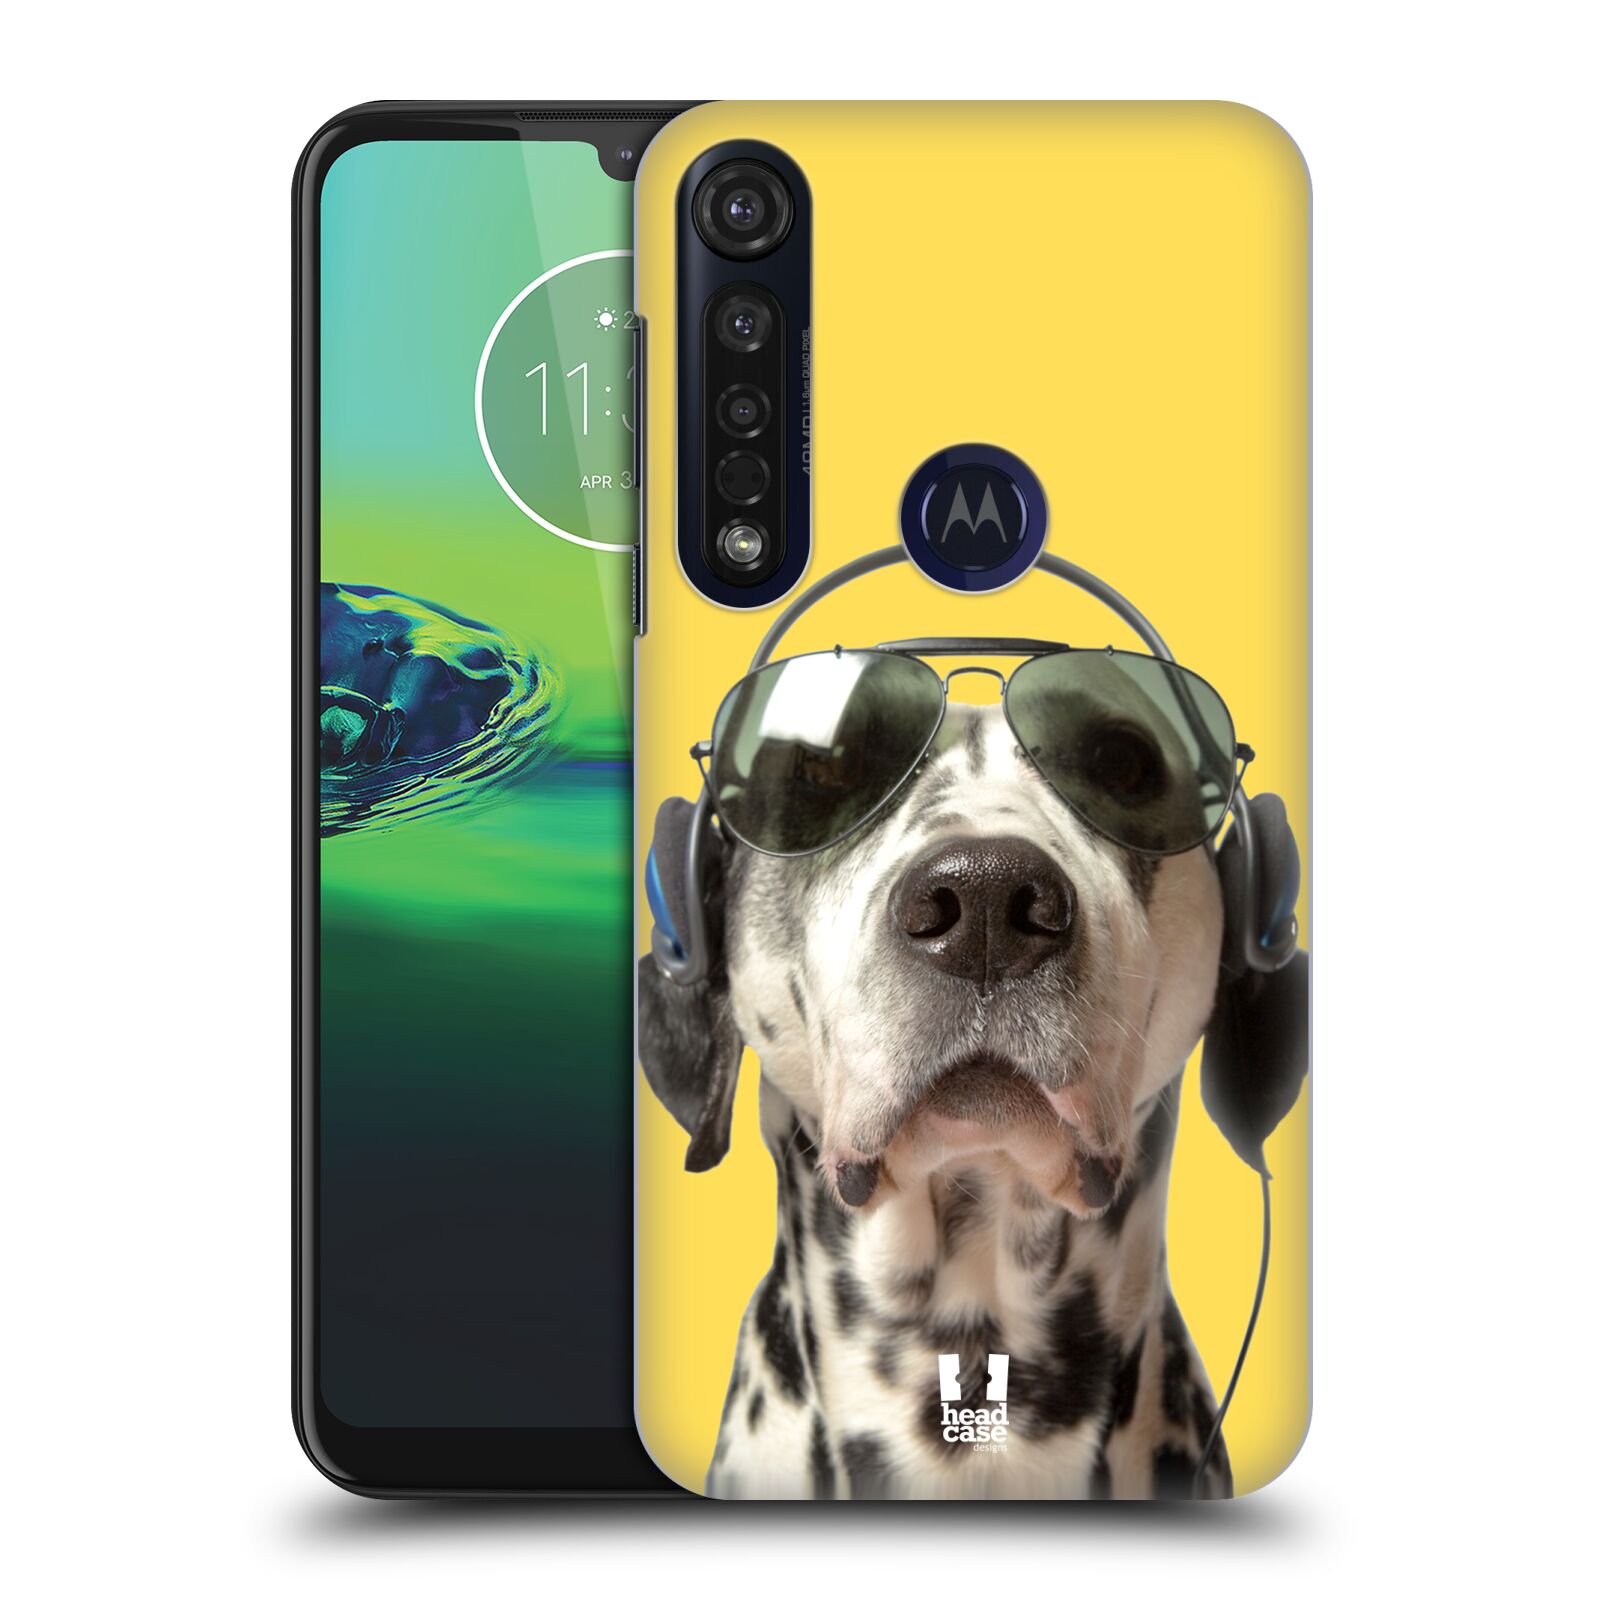 Pouzdro na mobil Motorola Moto G8 PLUS - HEAD CASE - vzor Legrační zvířátka dalmatin se sluchátky žlutá